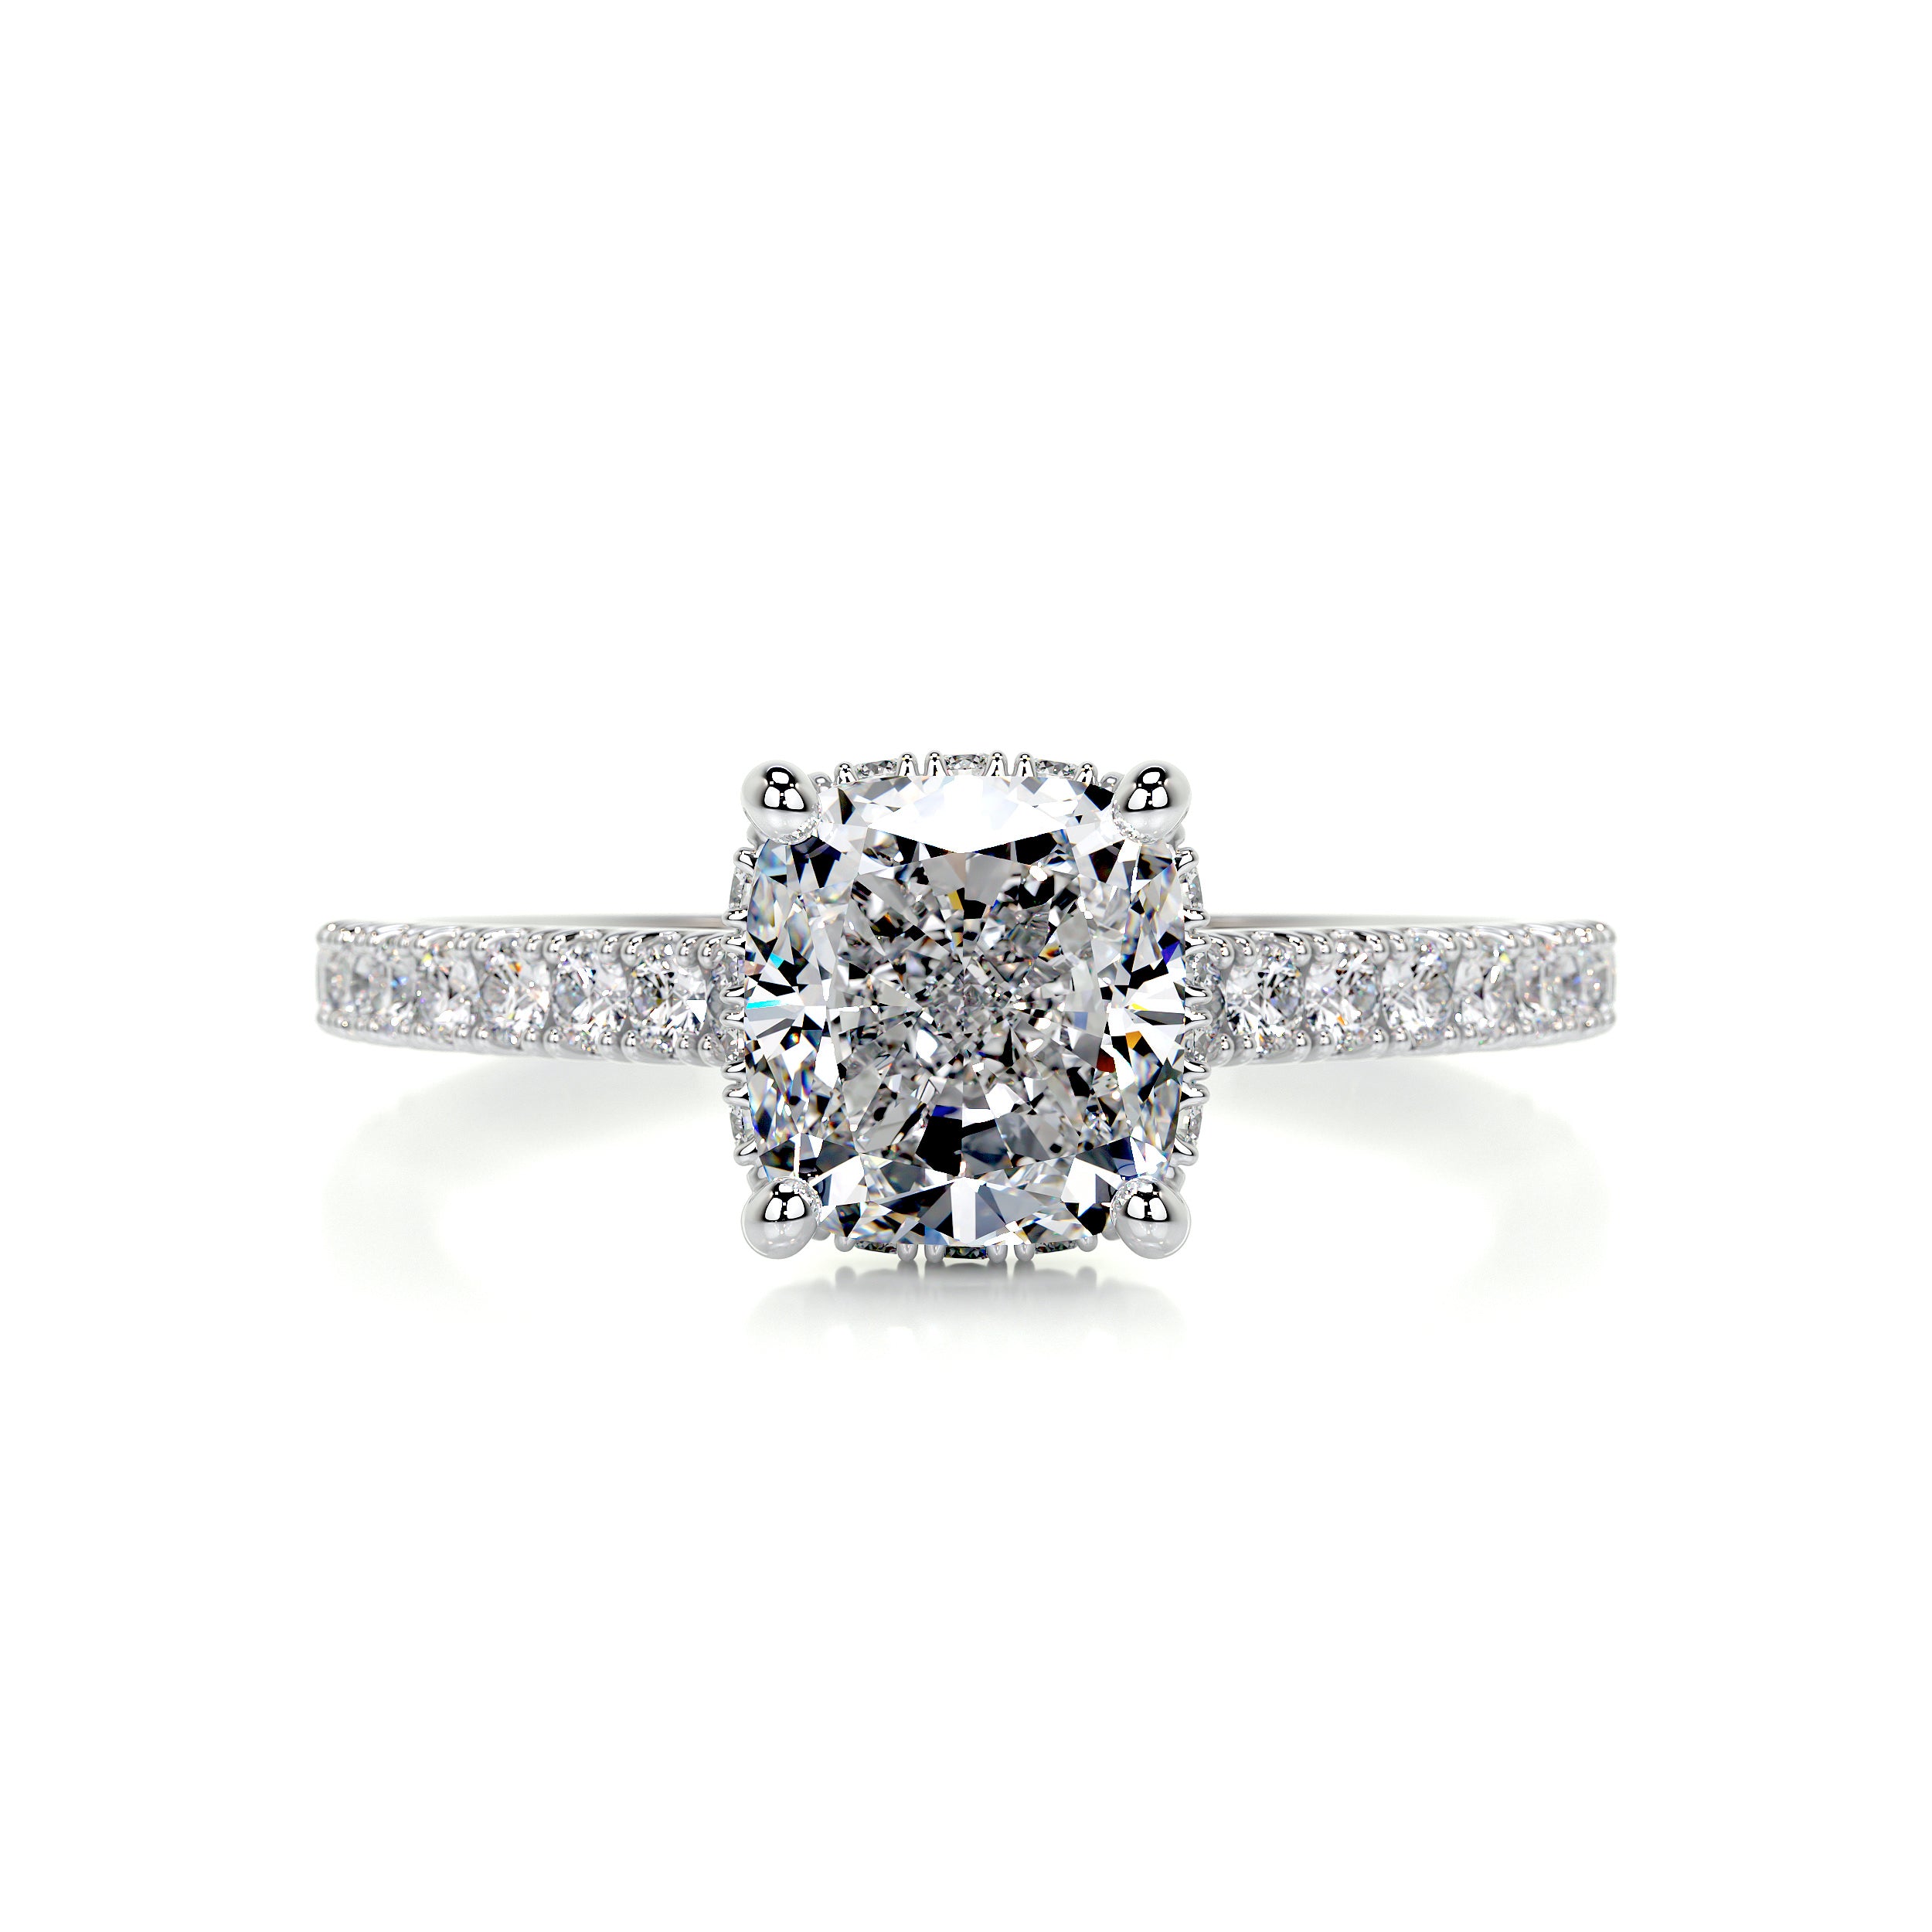 Cassandra Diamond Engagement Ring   (2 Carat) -18K White Gold